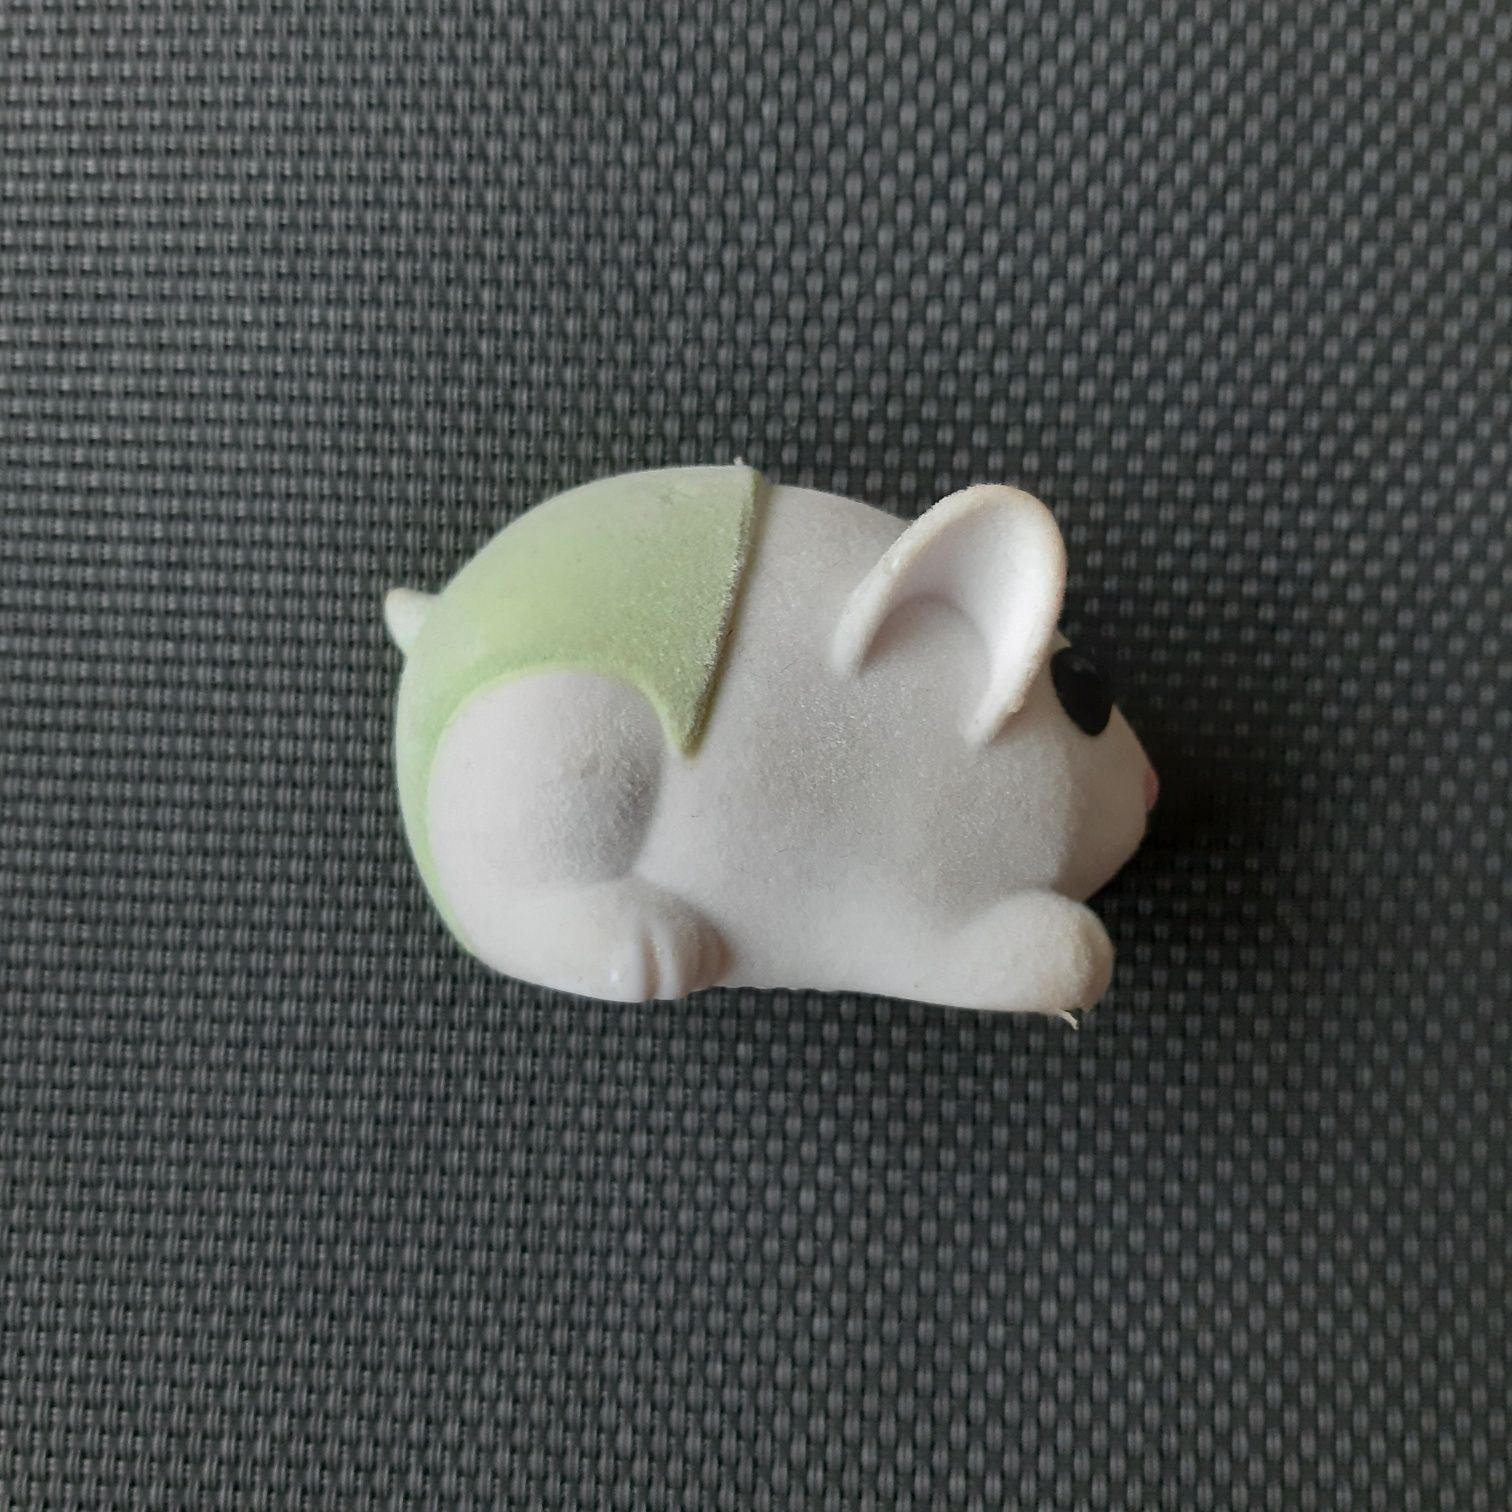 Mysz chomik myszka biała Zhu zhu pets unikat zabawka figurka